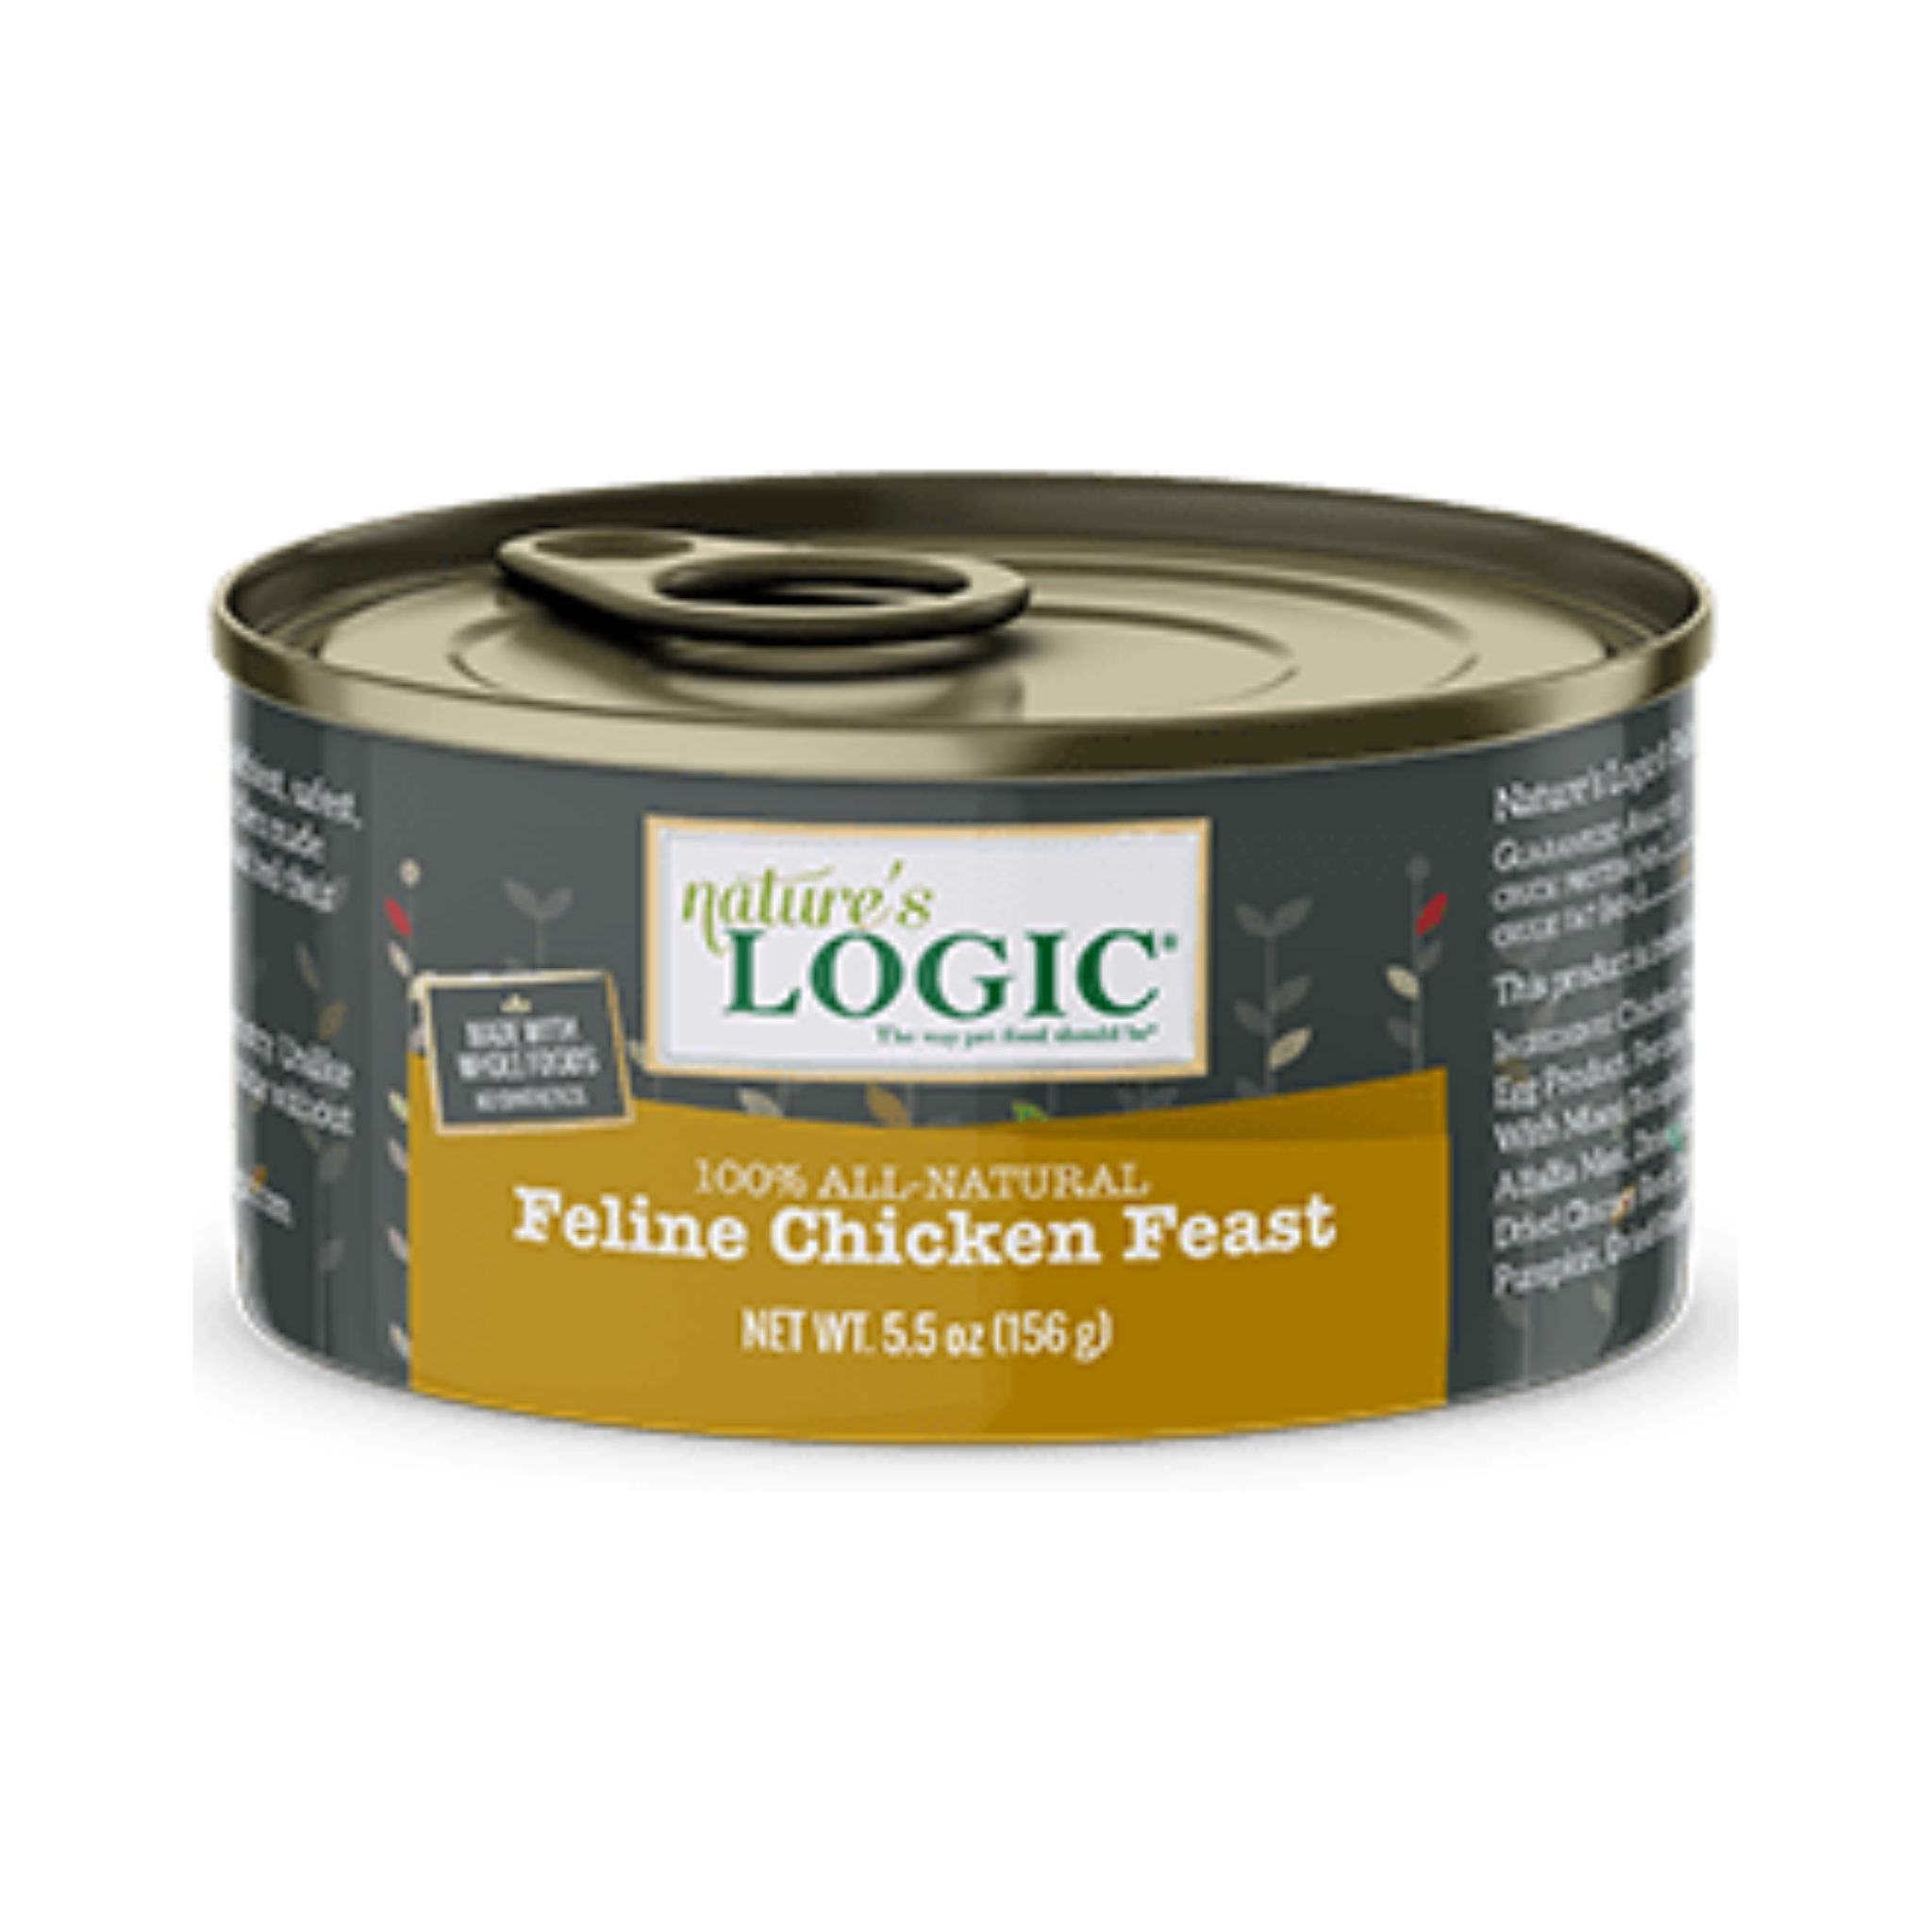 Nature's Logic Feline Chicken Feast Canned